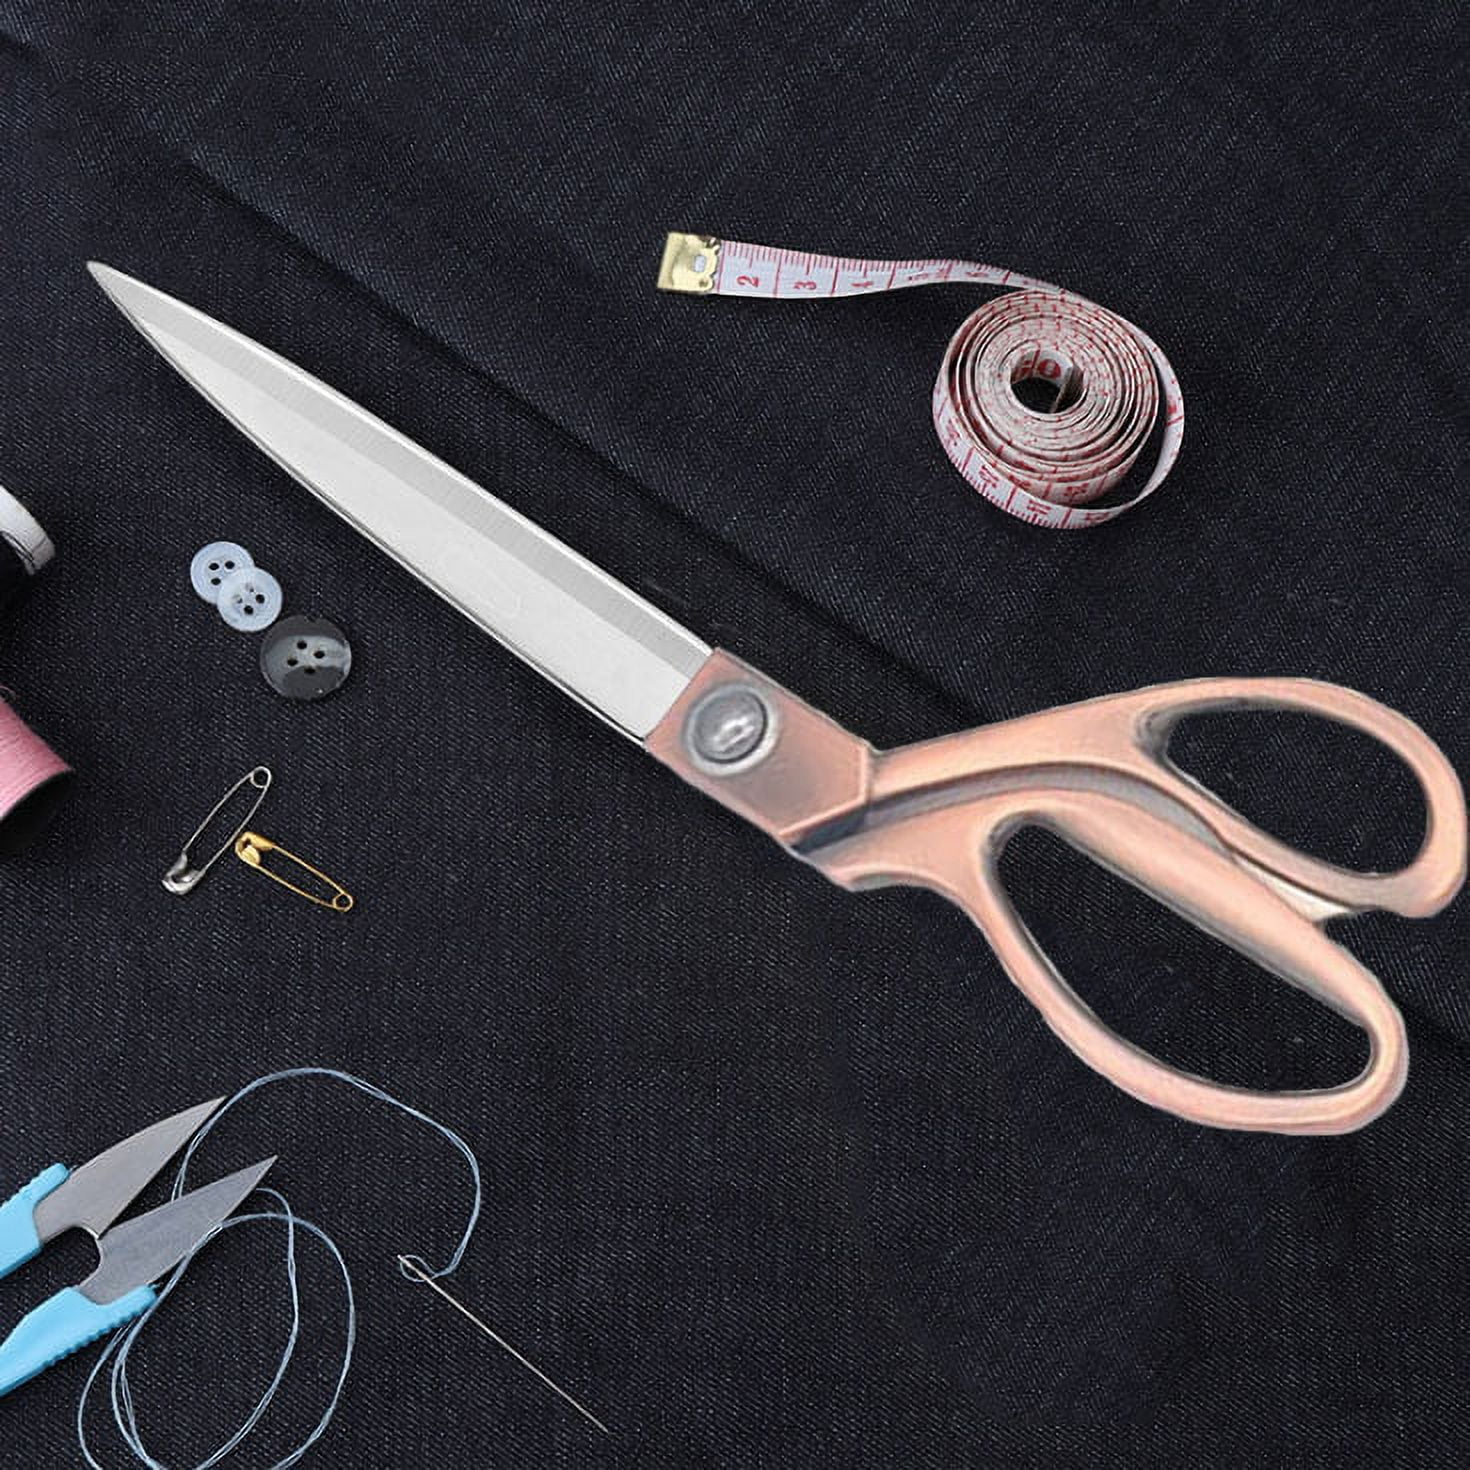 Best Fabric Scissors For Cutting Cloth & Fabric